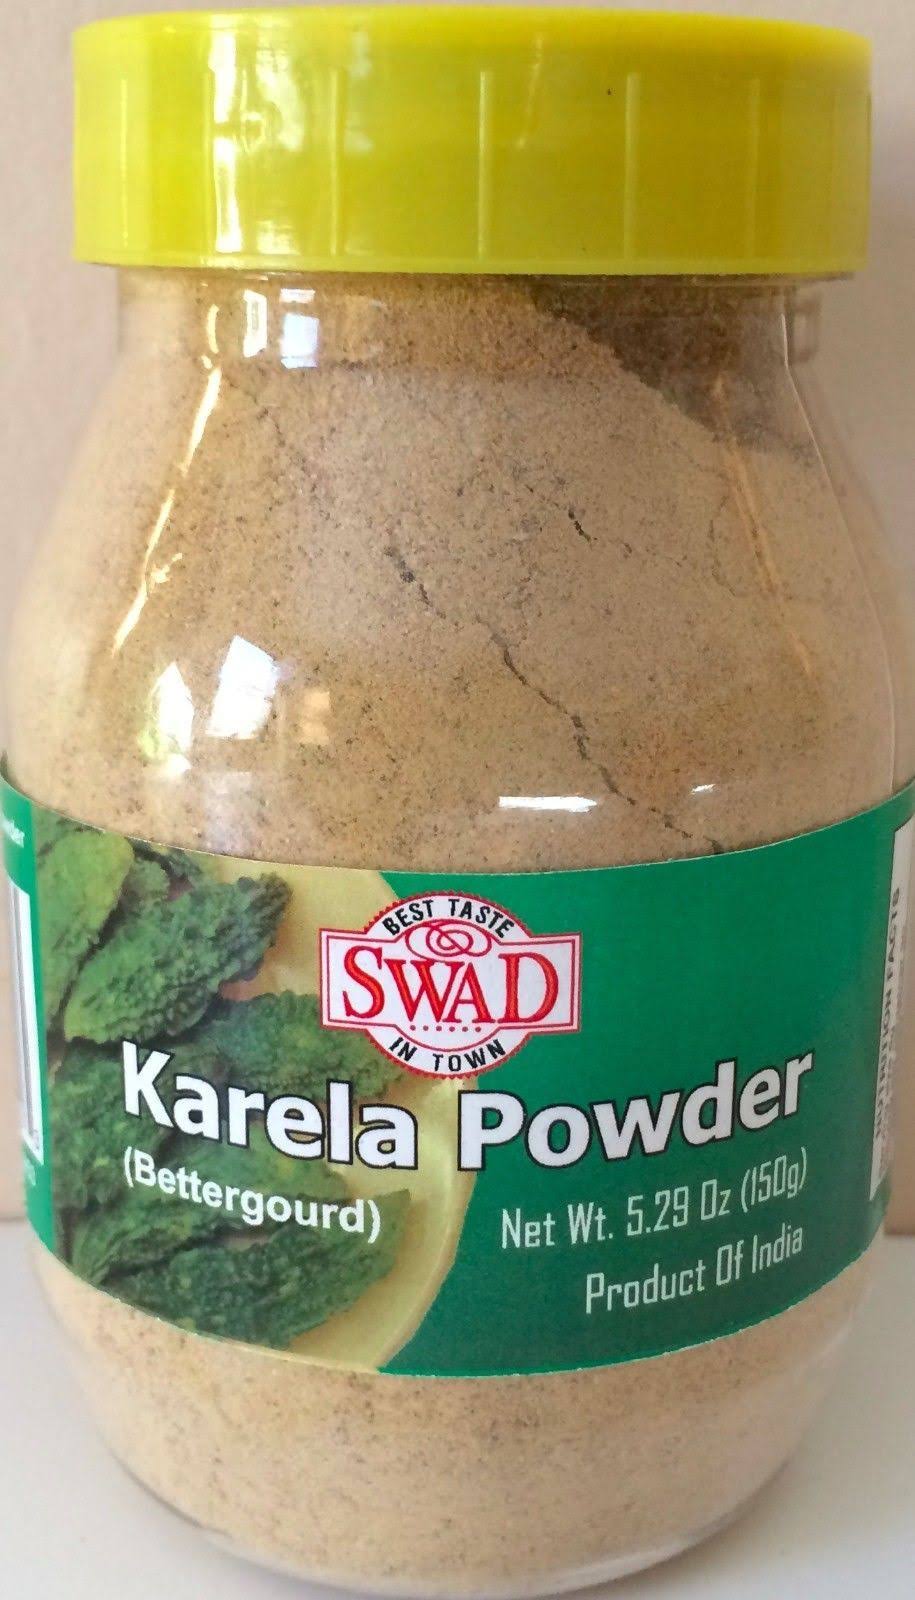 Swad Karela Powder - 150g